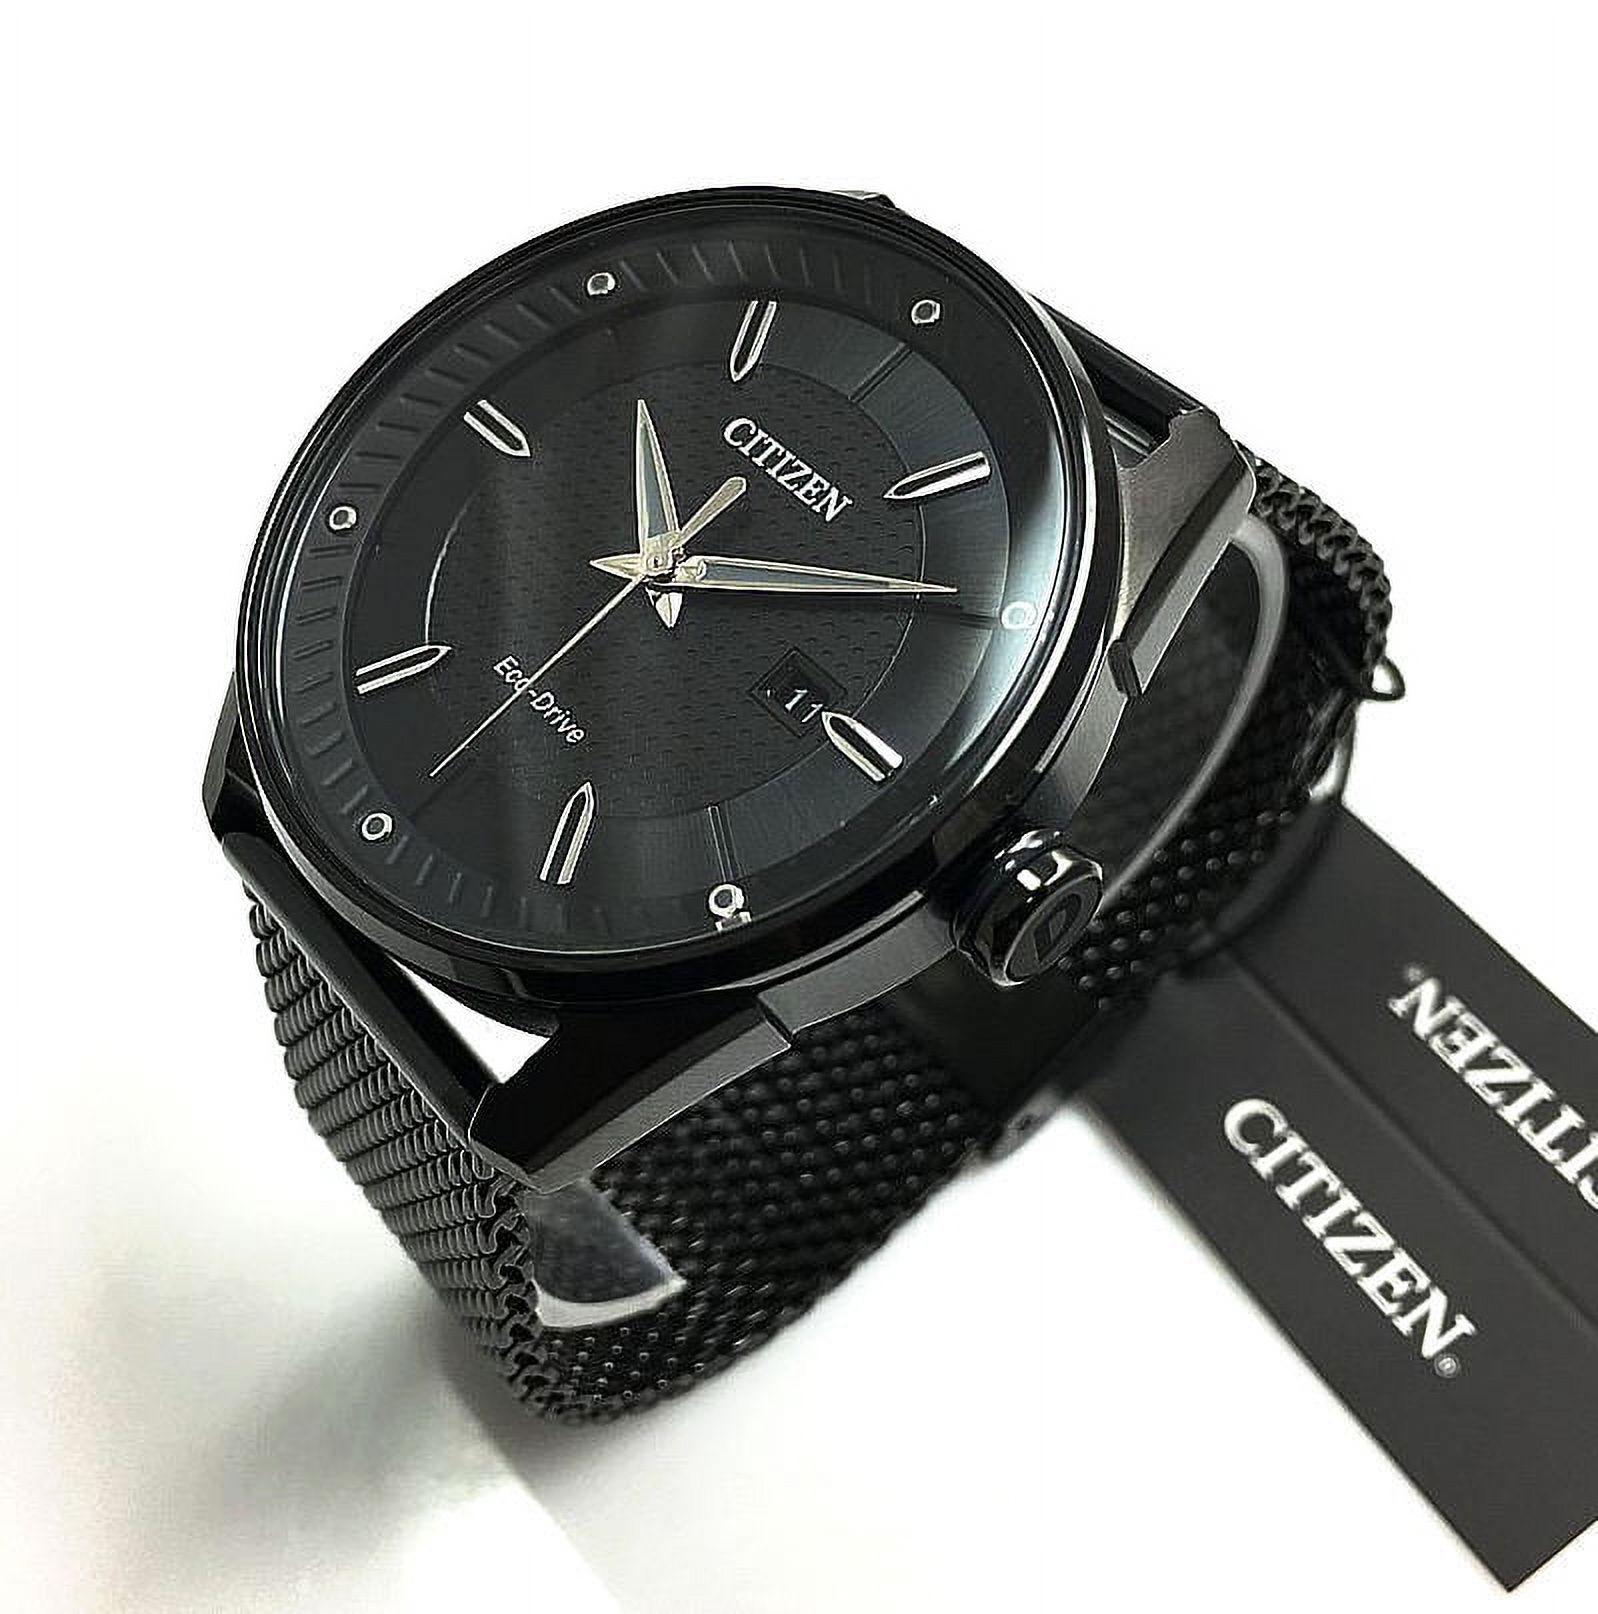 Citizen Men's Drive Weekender Sport Casual Black Stainless Steel Watch BM6988-57E - image 2 of 4